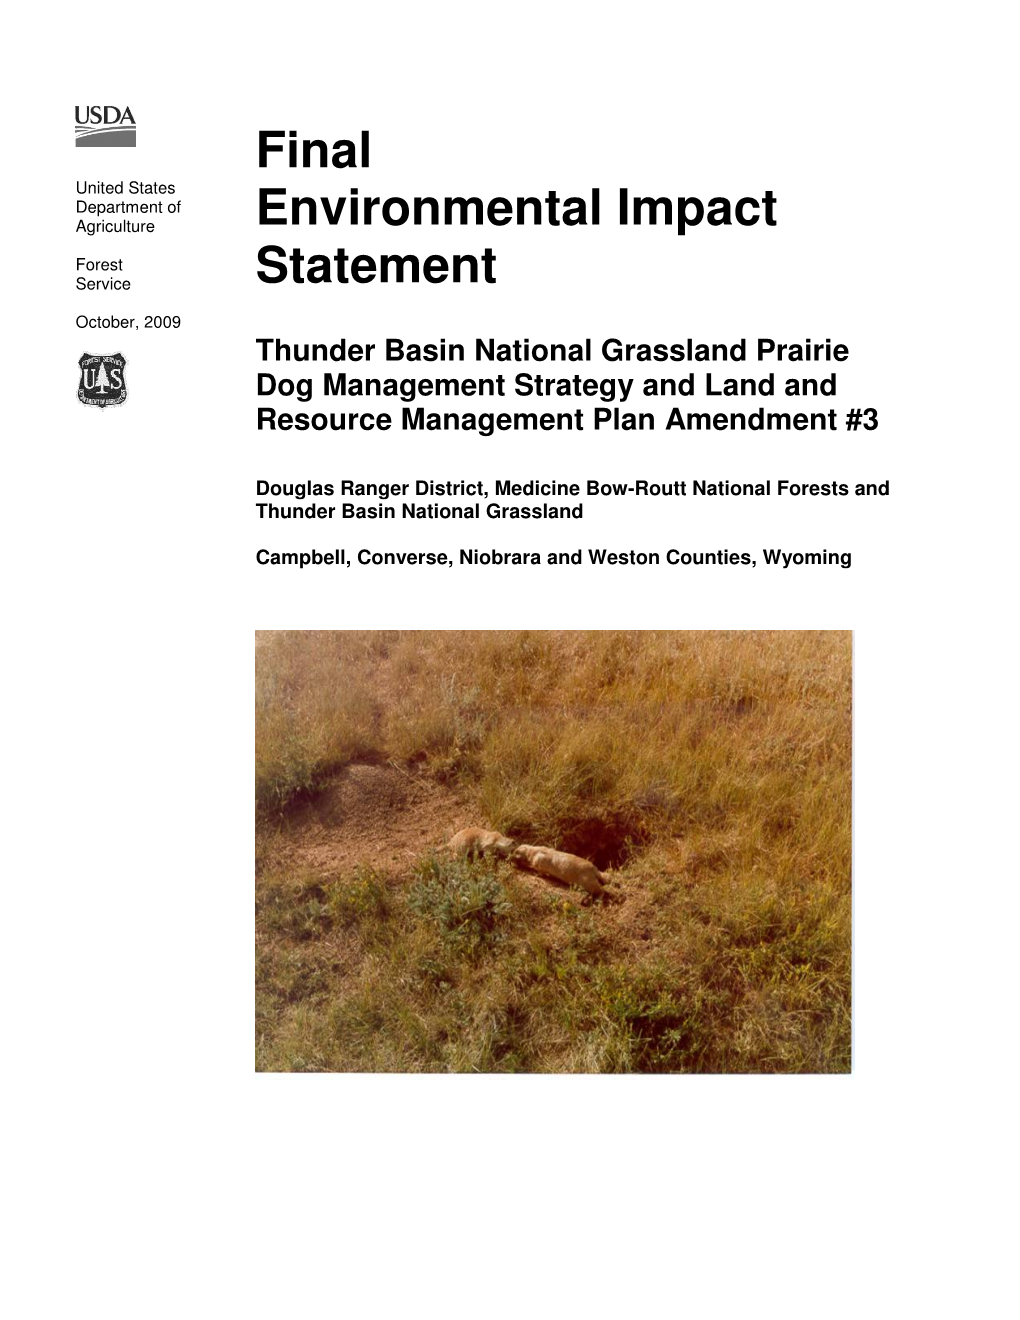 Final Environmental Impact Statement Campbell, Converse, Niobrara and Weston Counties, Wyoming